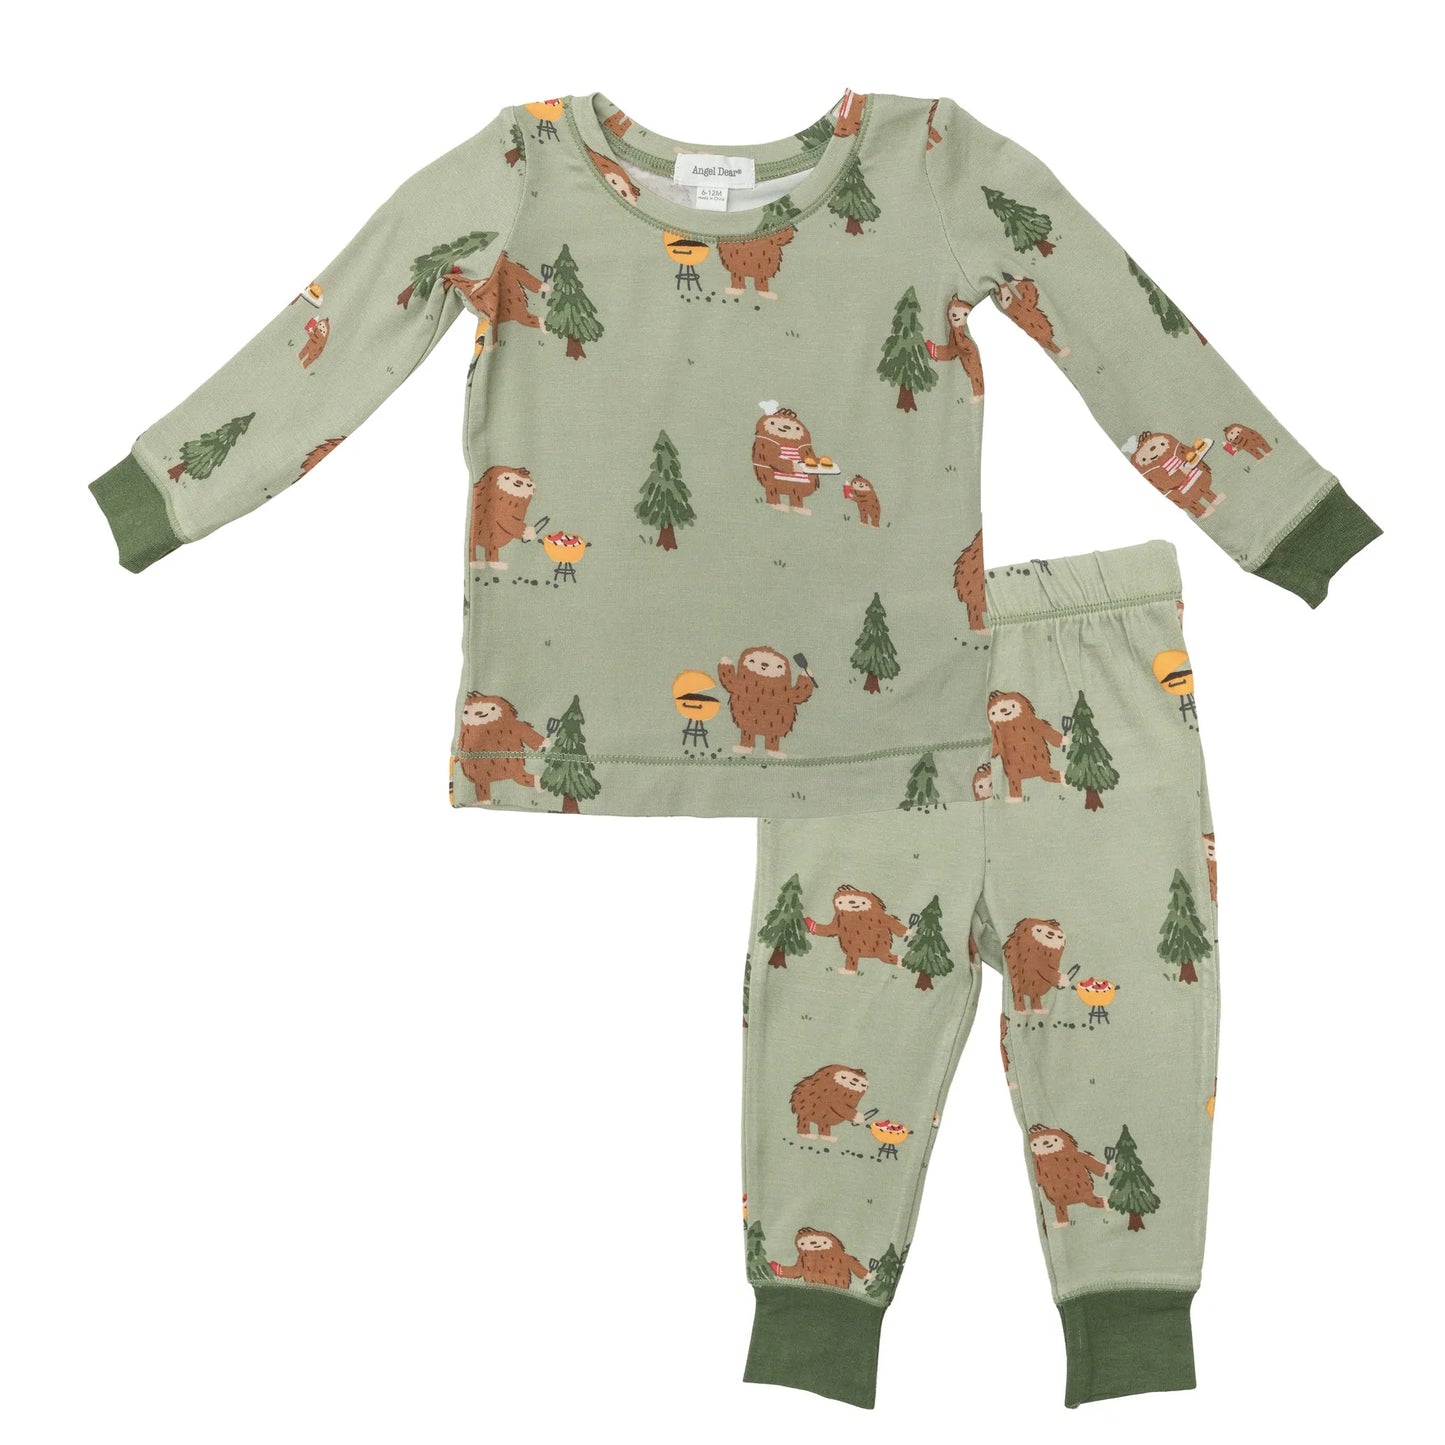 2 Piece Pajamas (Short Sleeves) - Bigfoot BBQ